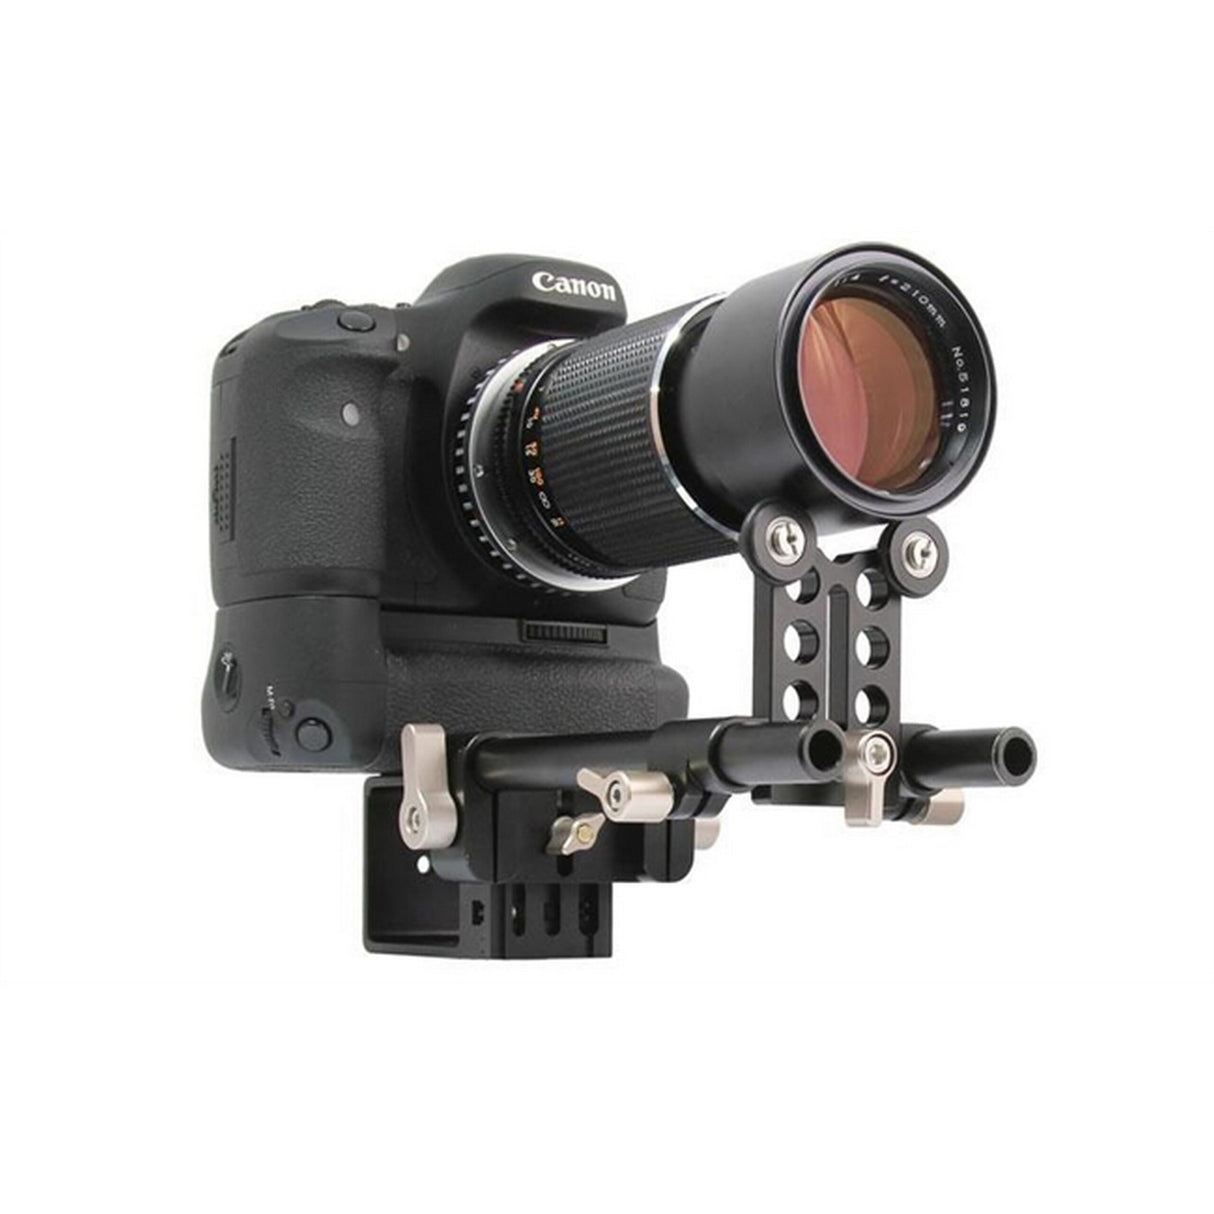 Genustech G-LSB Lens Support Bracket